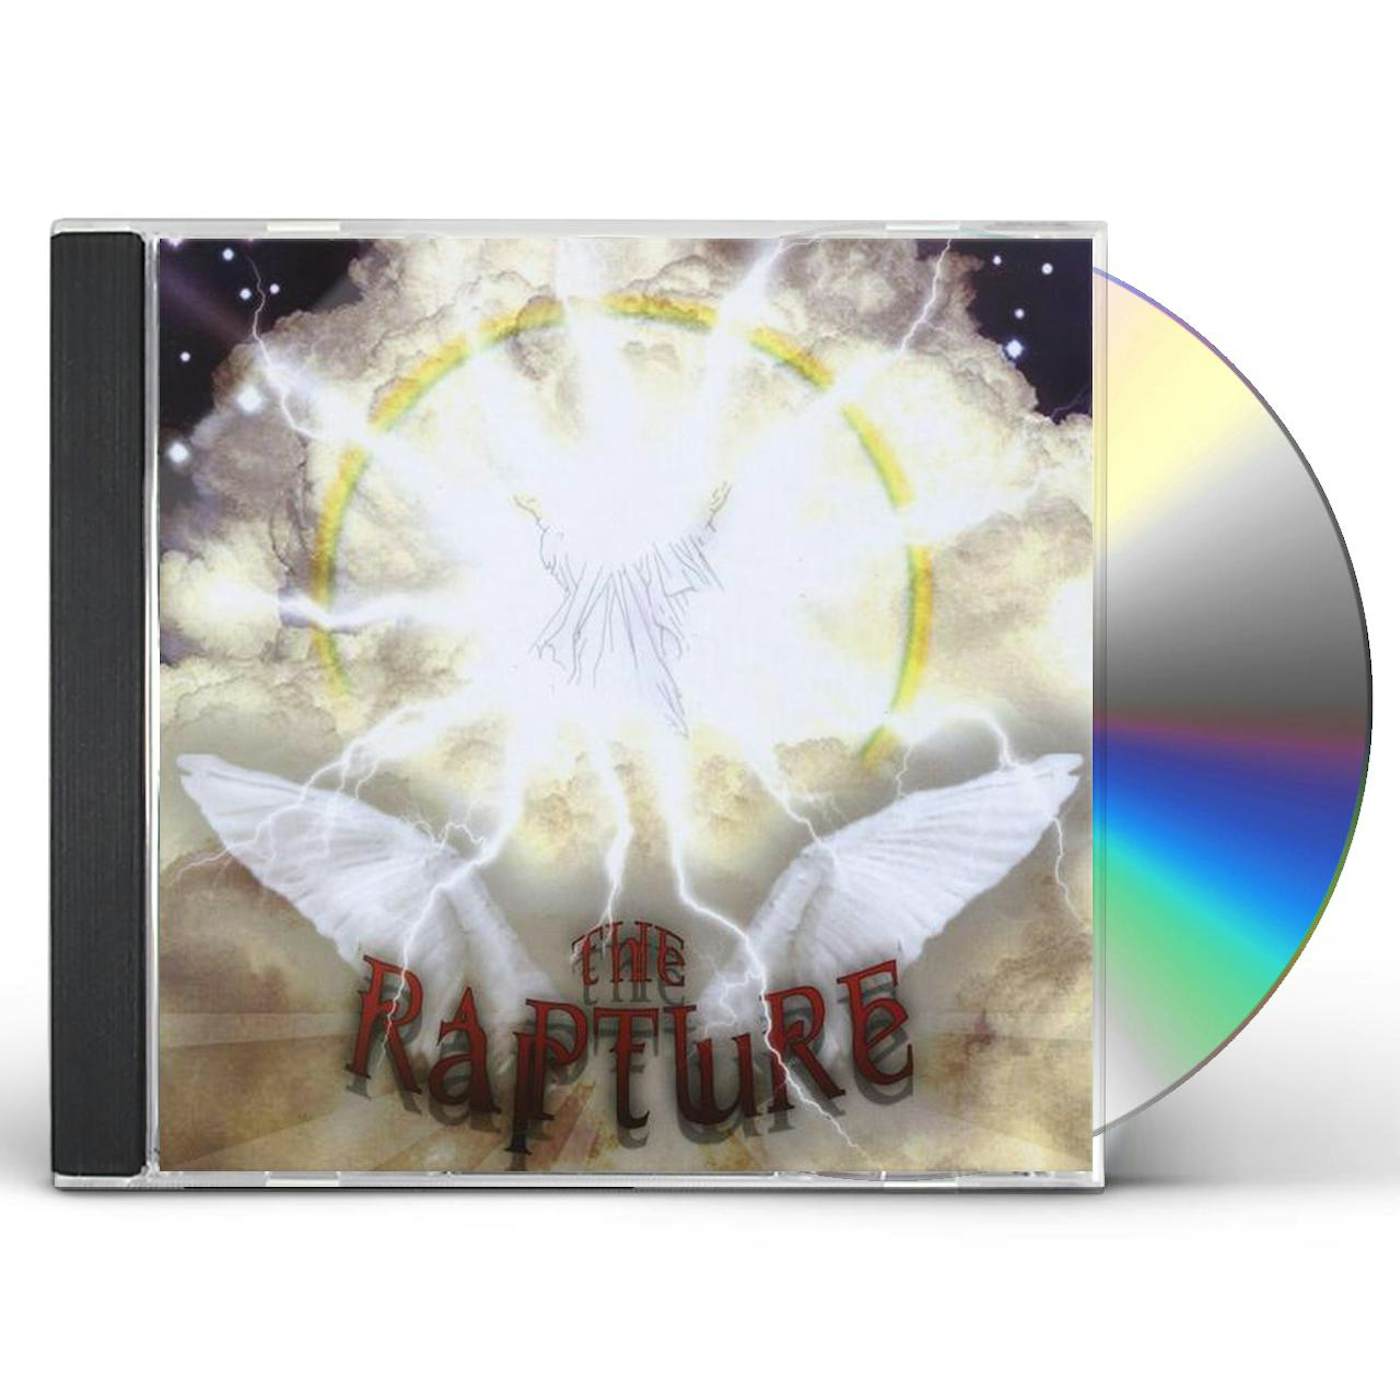 David RAPTURE CD